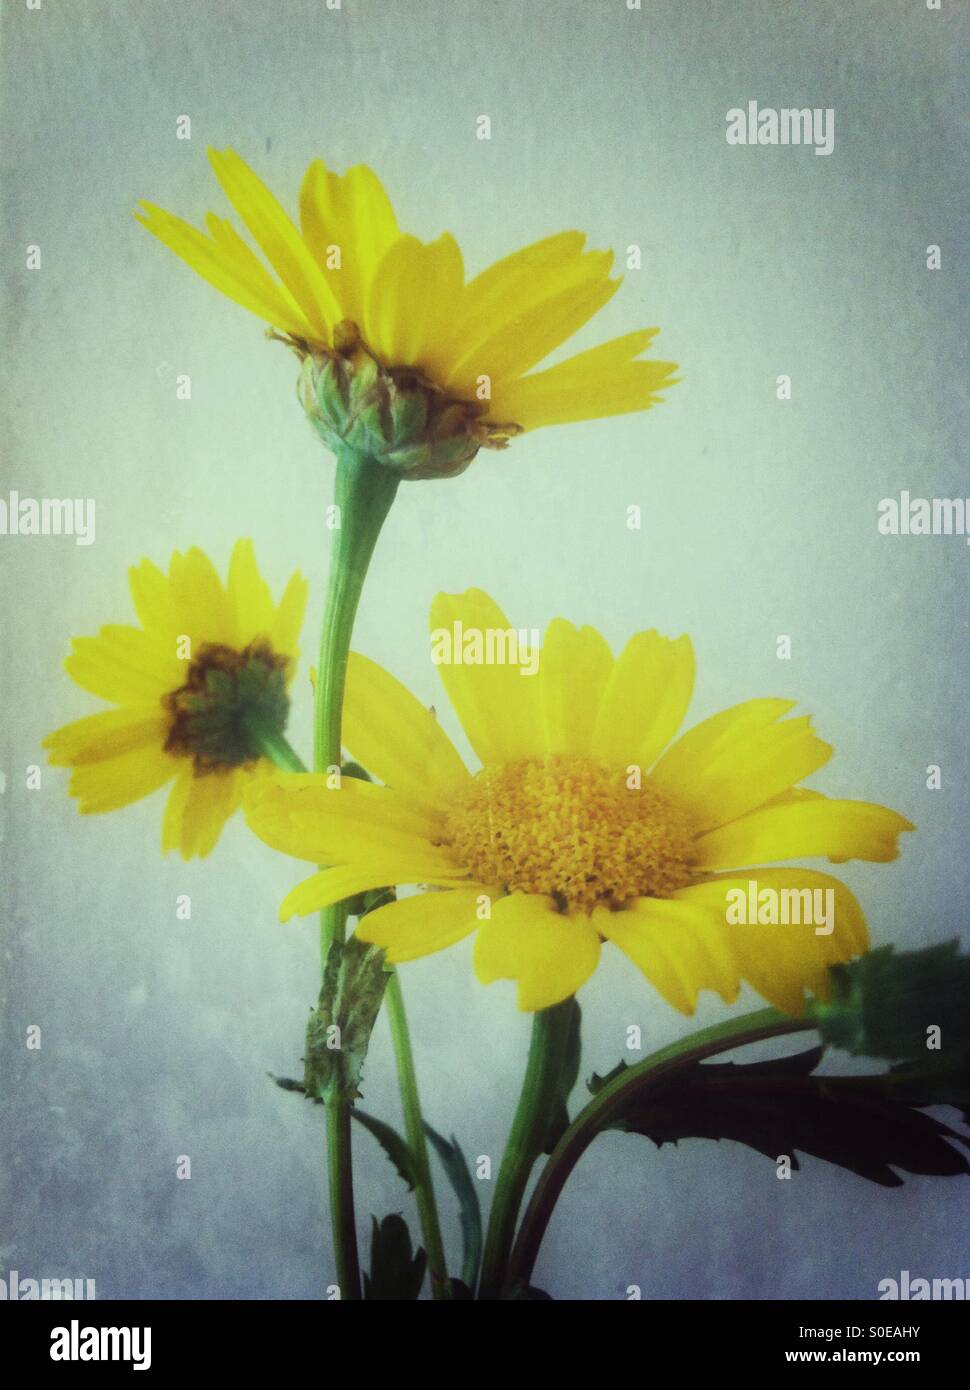 Yellow daisy flowers Stock Photo